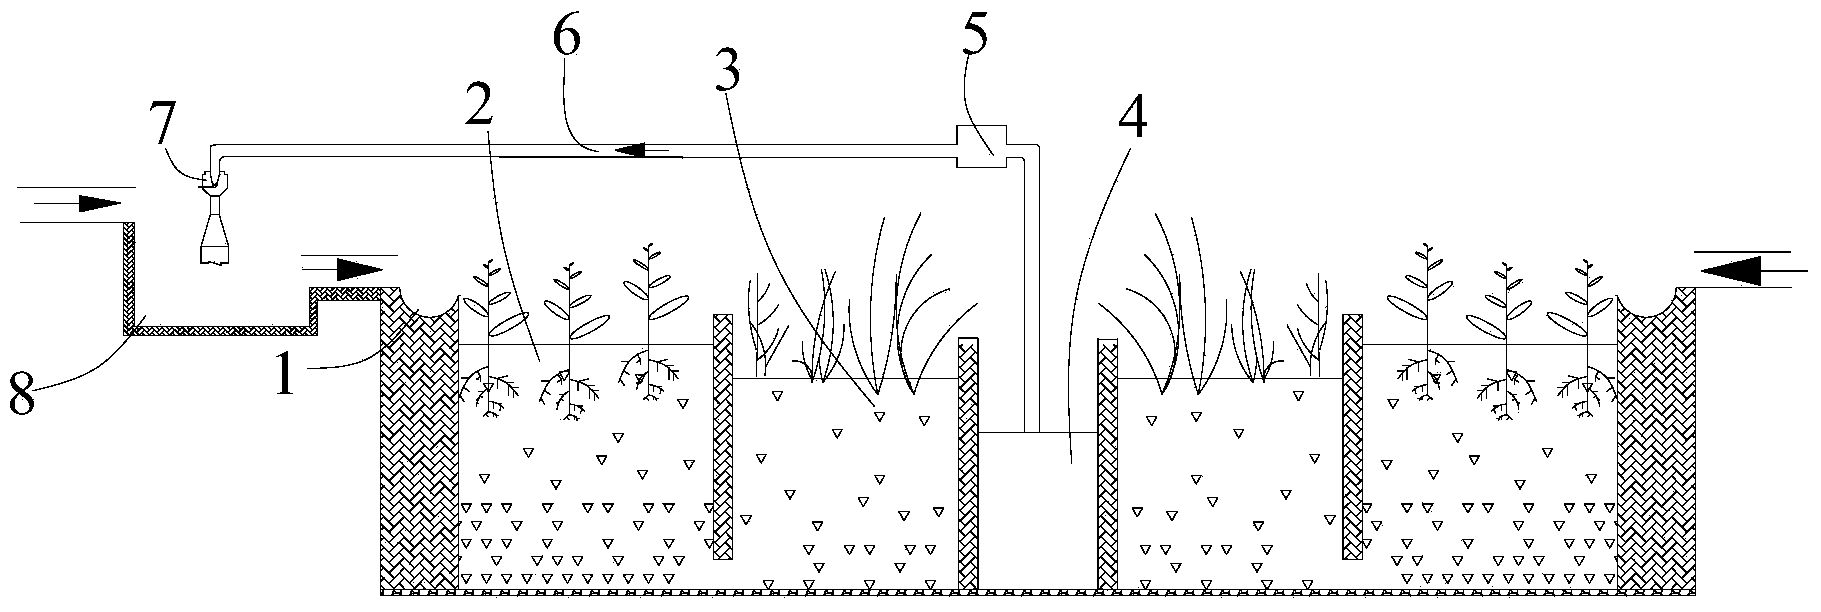 Vertical-flow self-aeration annular artificial wetland system